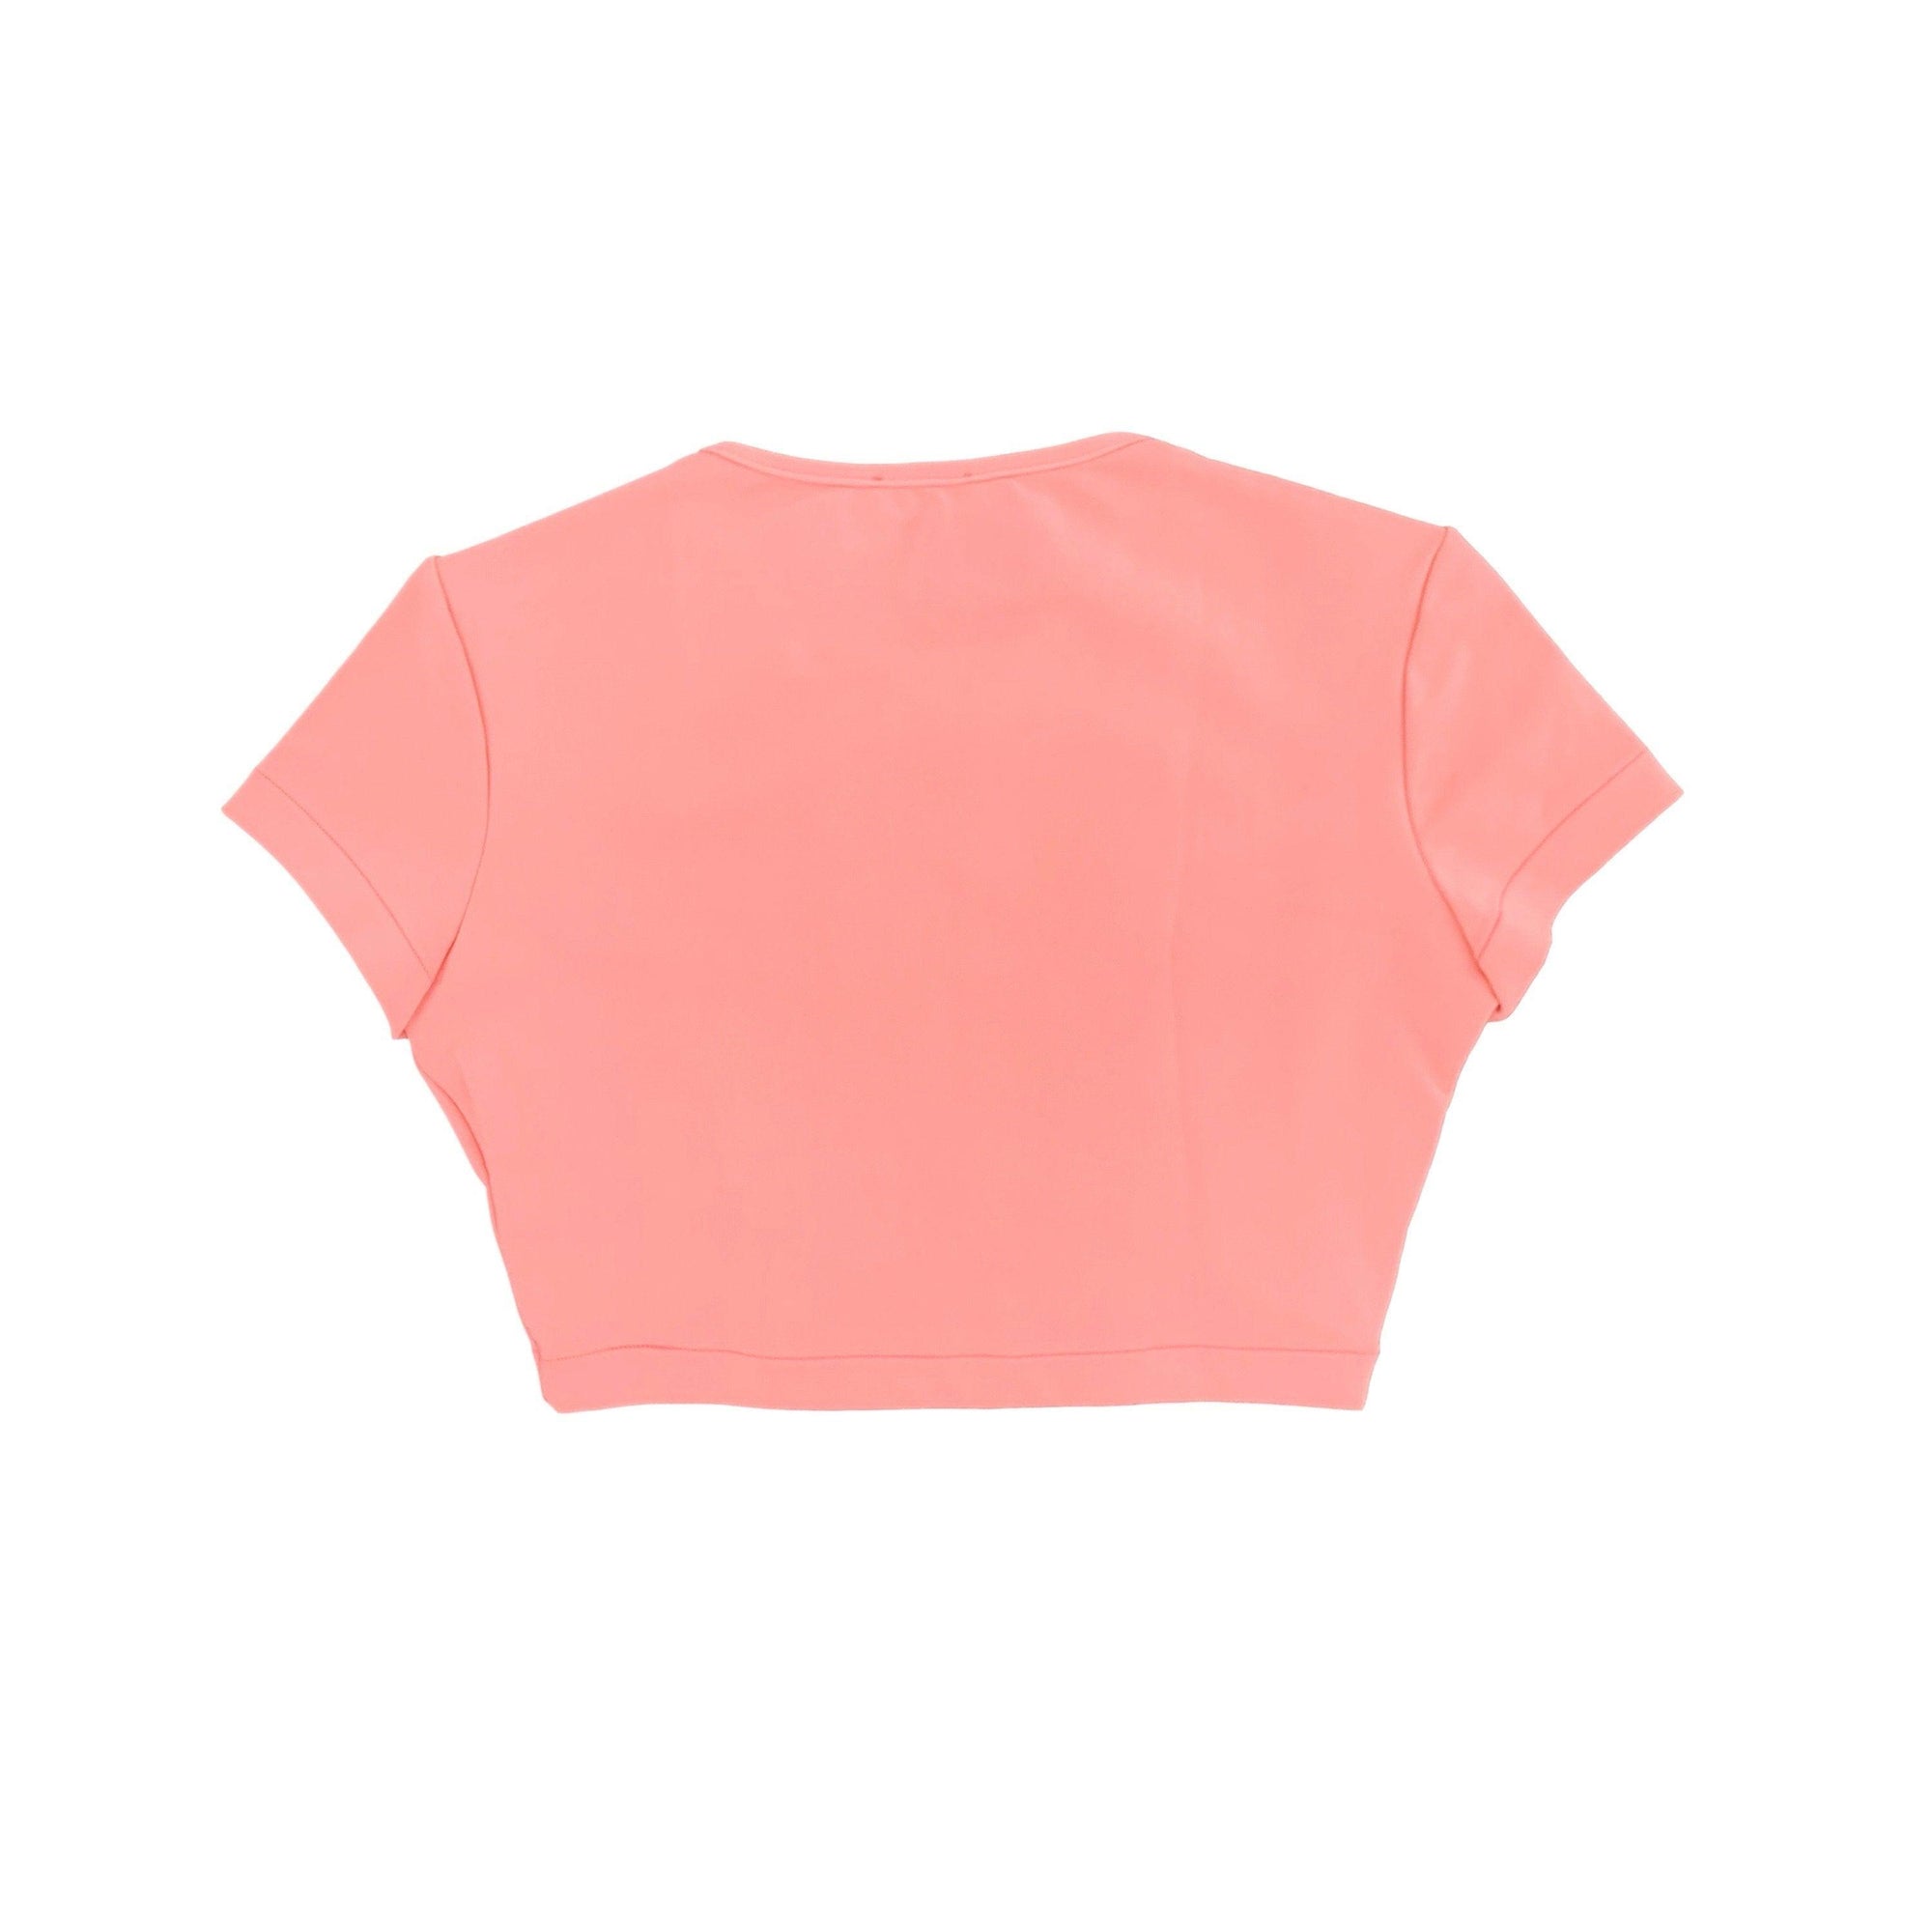 Chanel Baby Pink Logo Crop Top - Apparel